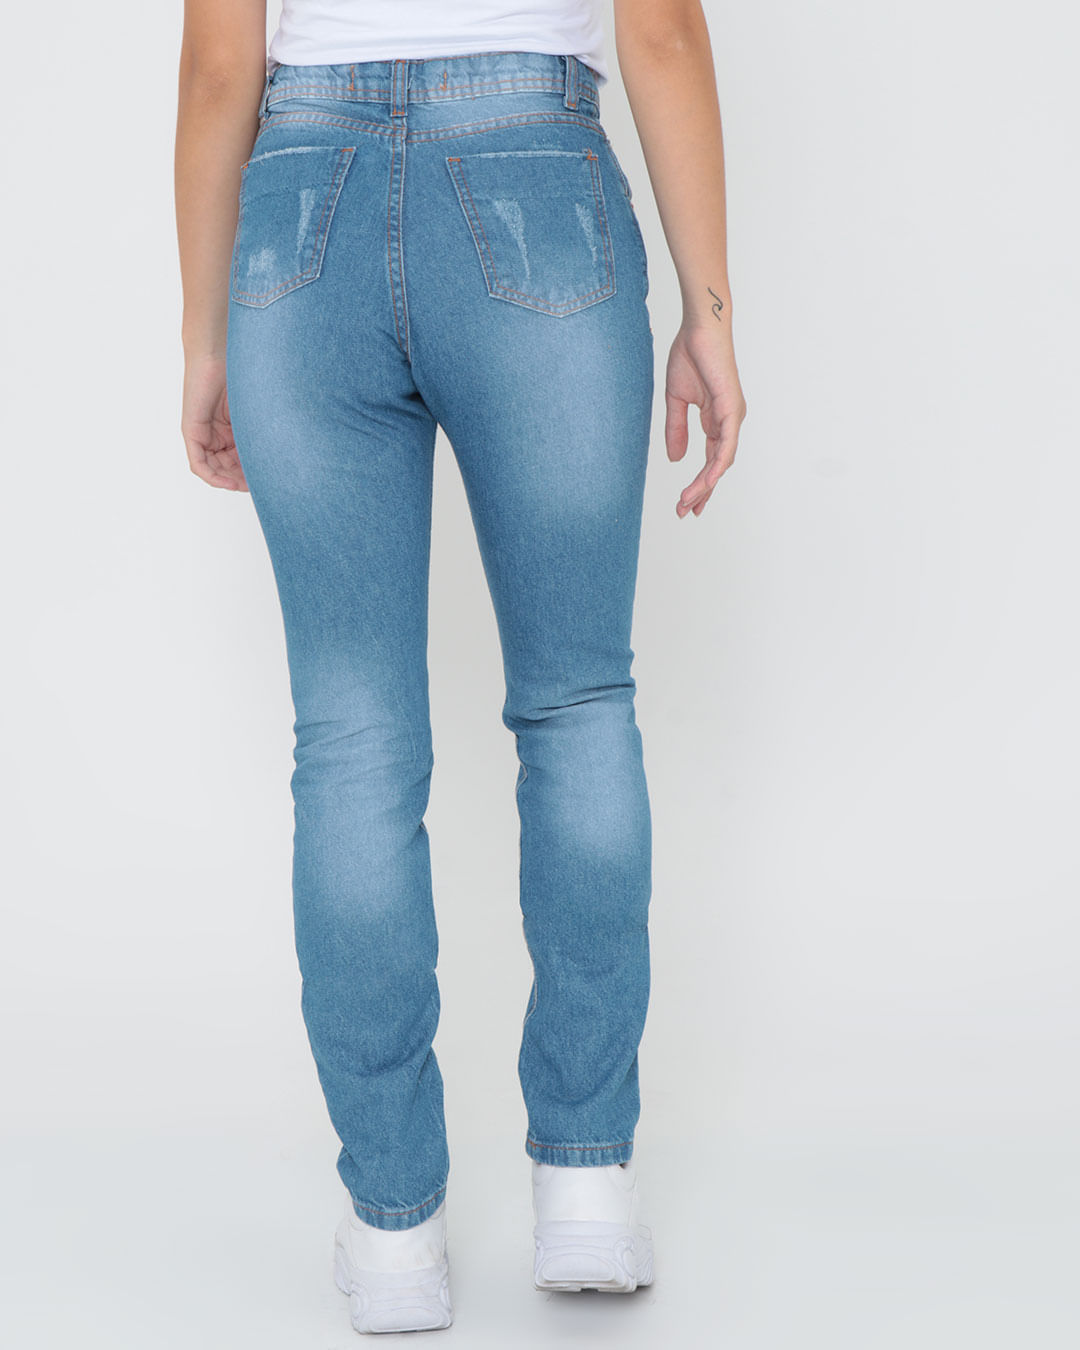 Calca-Mom-Jeans-2840-F-Lc-1016---Blue-Jeans-Claro